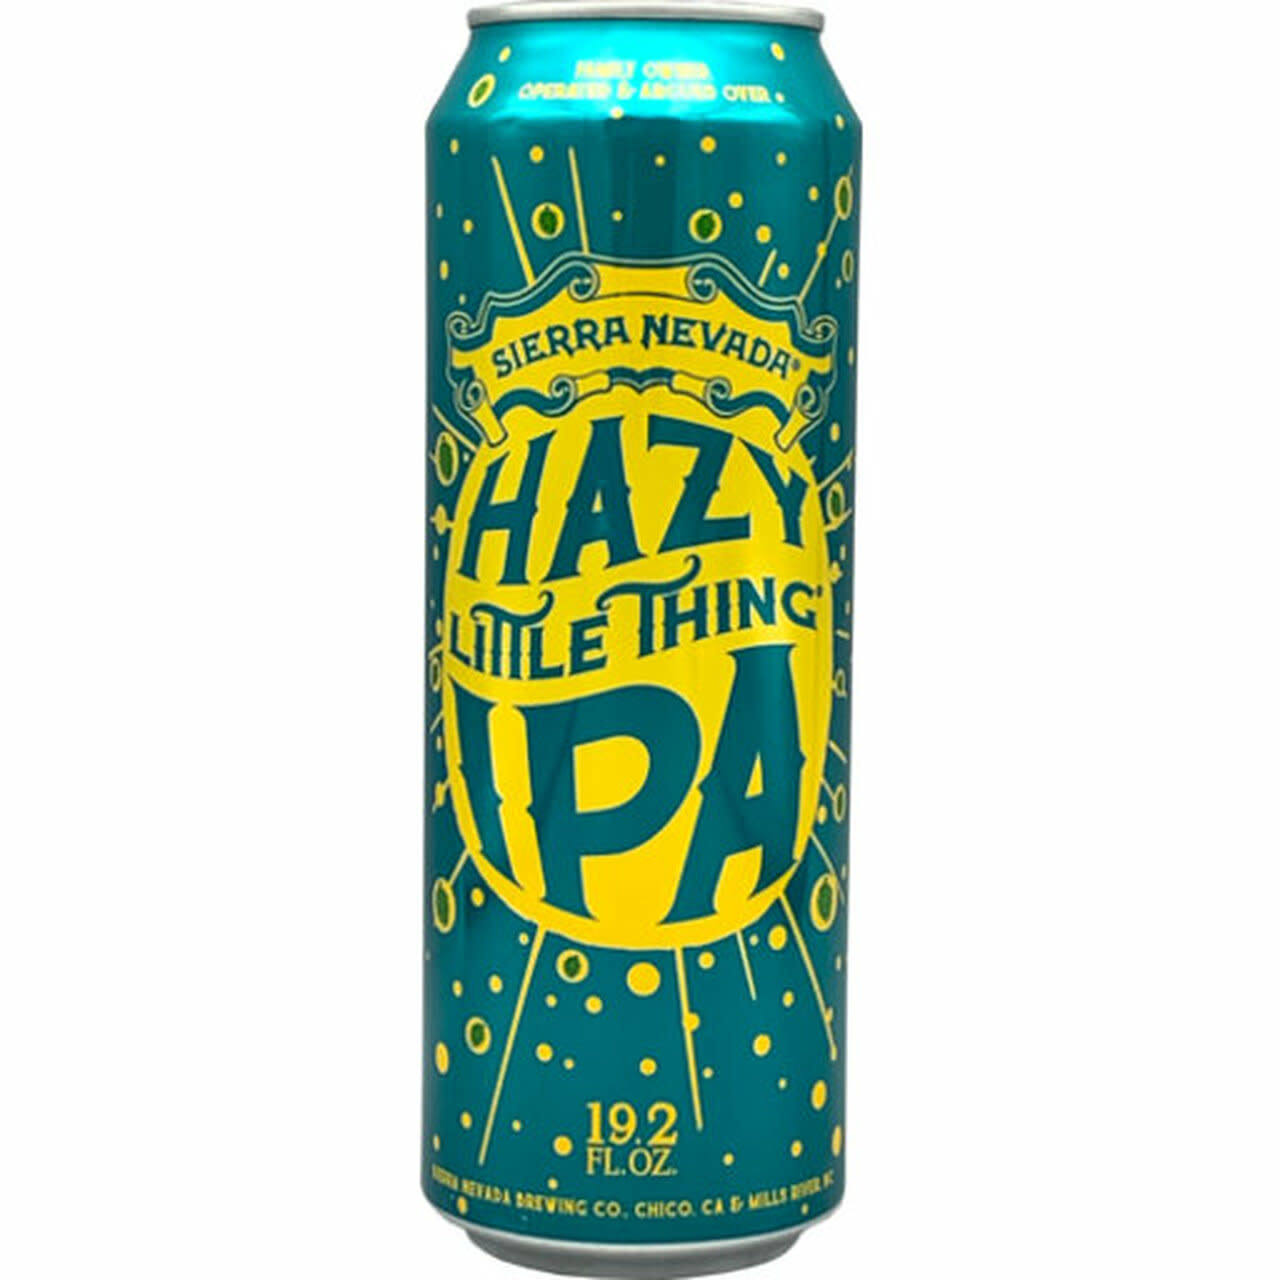 Sierra Nevada Beer, IPA, Hazy Little Thing - 19.2 fl oz